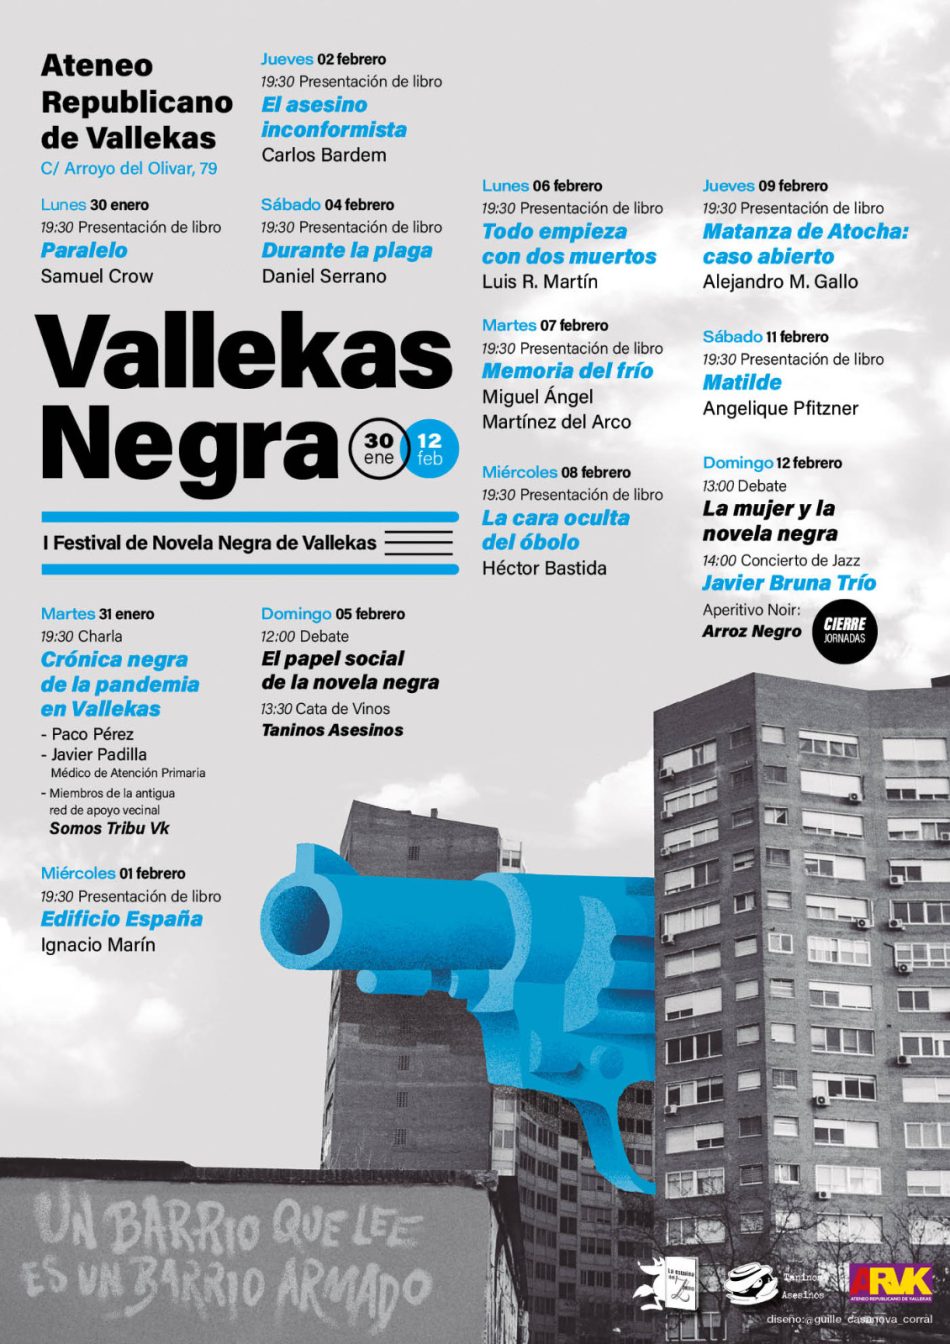 Llega «Vallekas Negra», el primer festival de novela negra de Vallecas